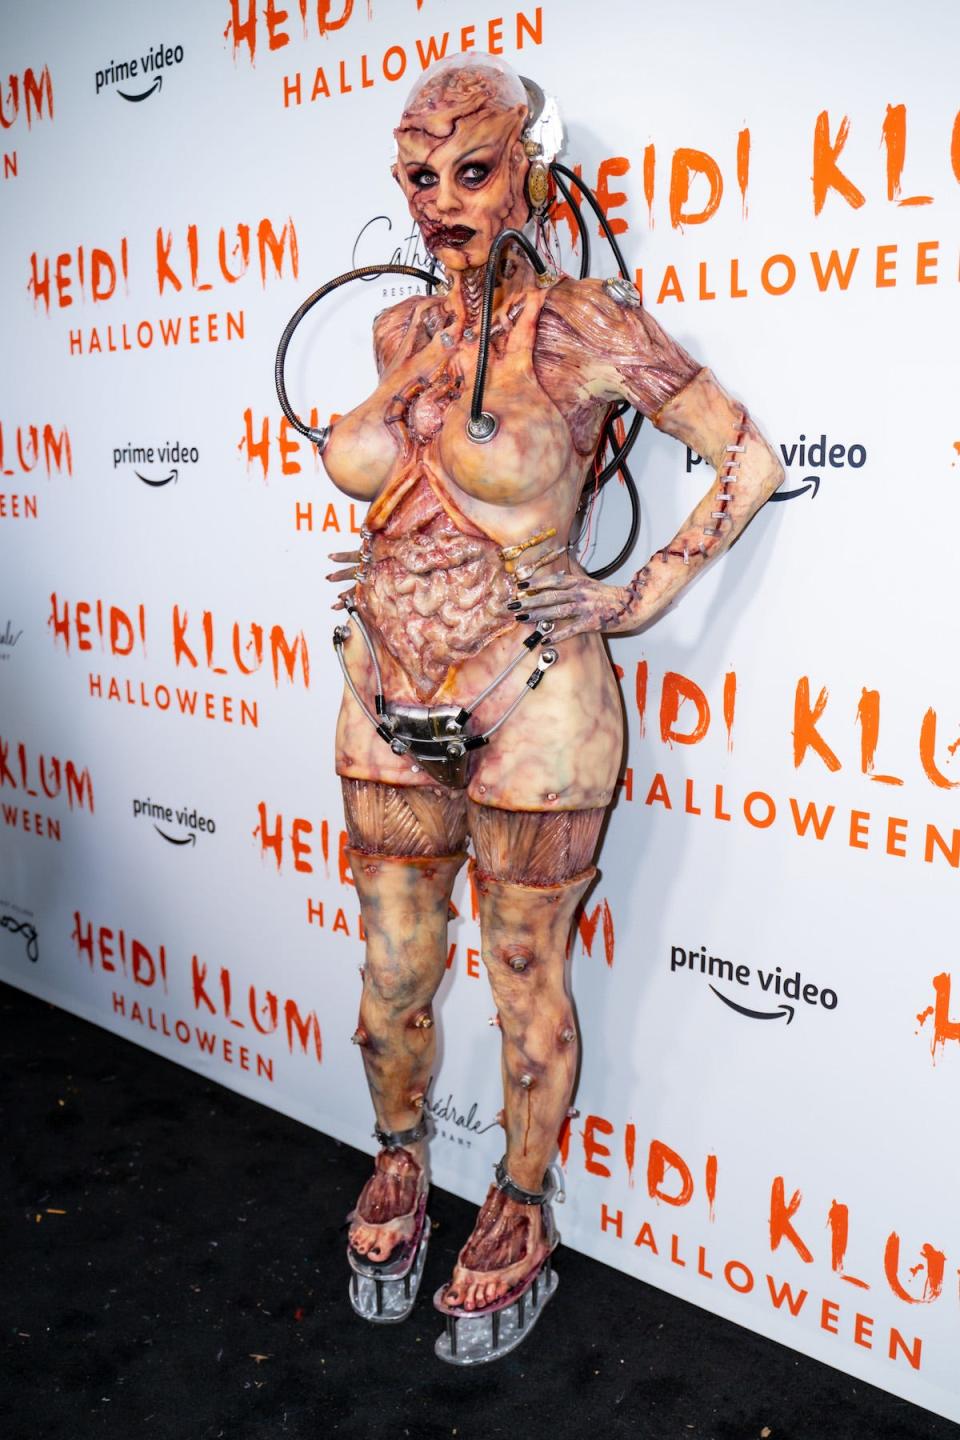 Heidi Klum at her Halloween party